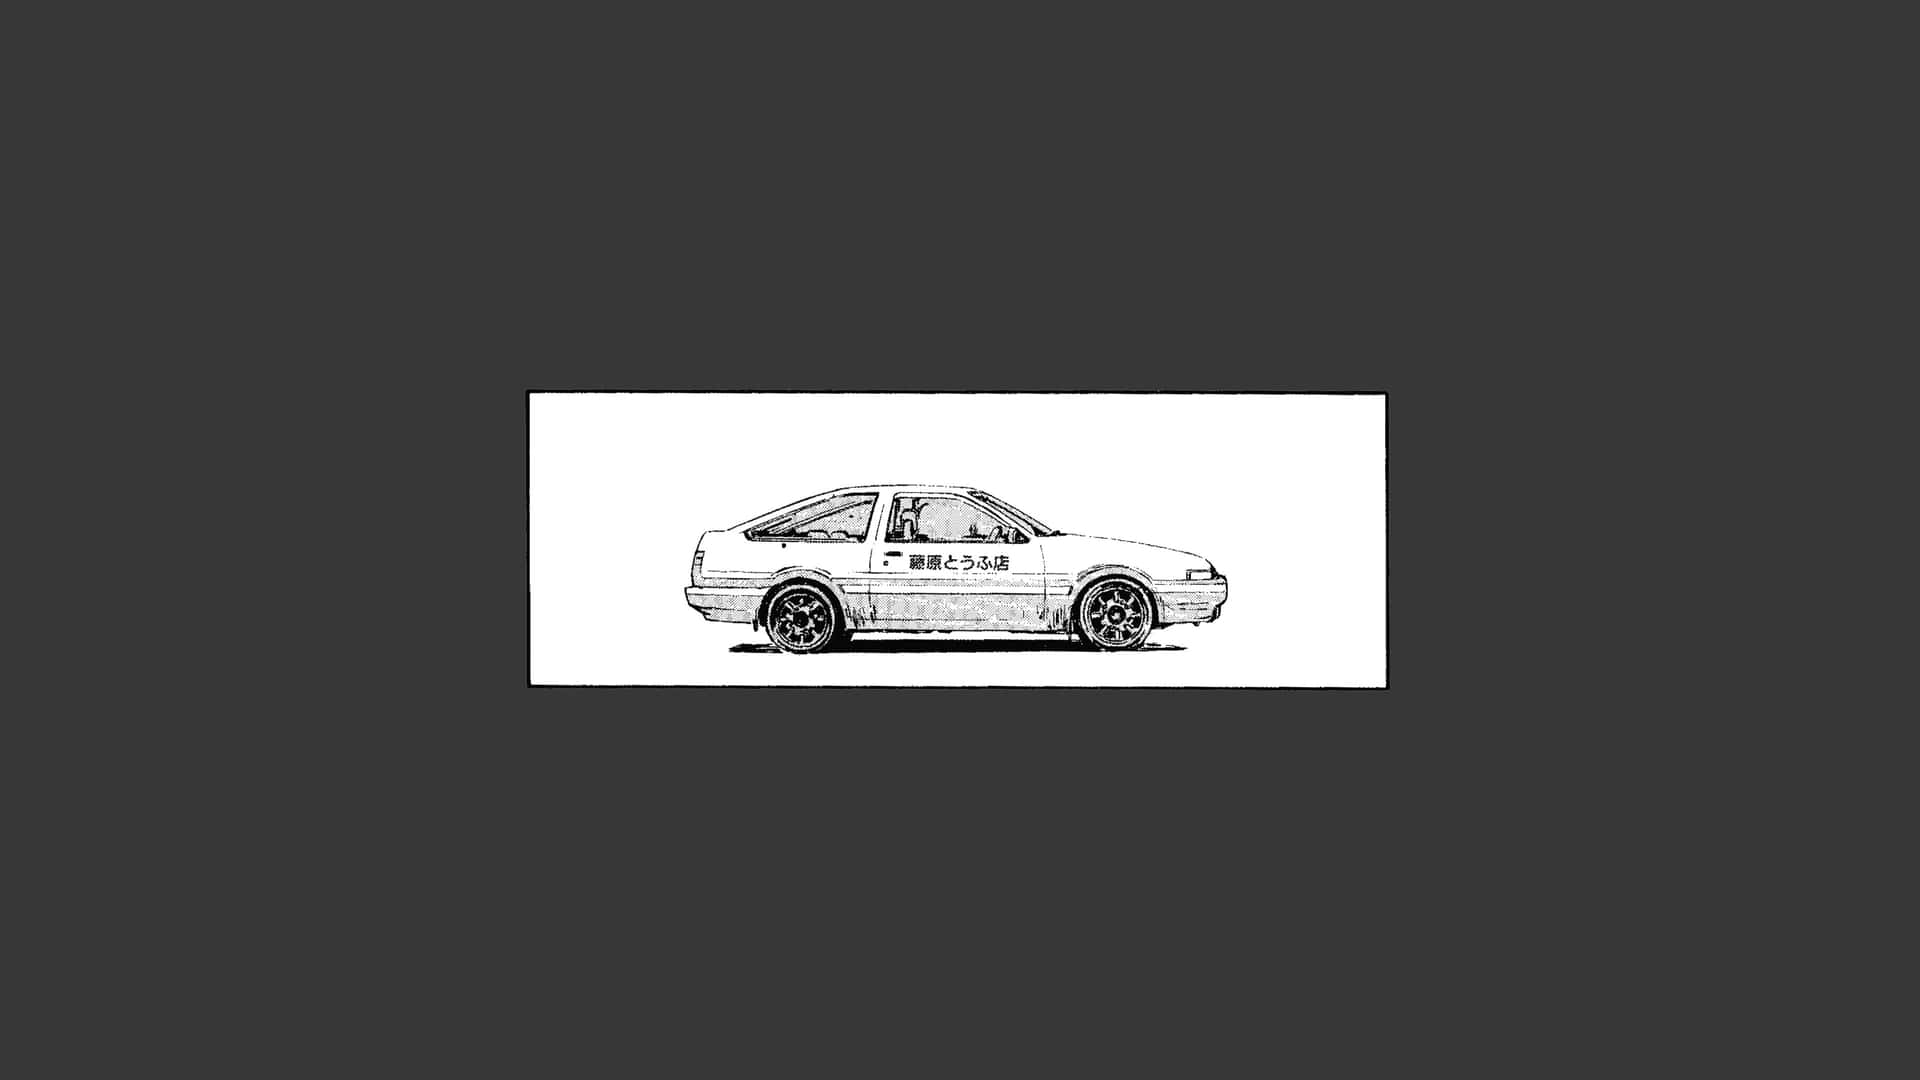 Klassischessportauto: Toyota Ae86 Wallpaper